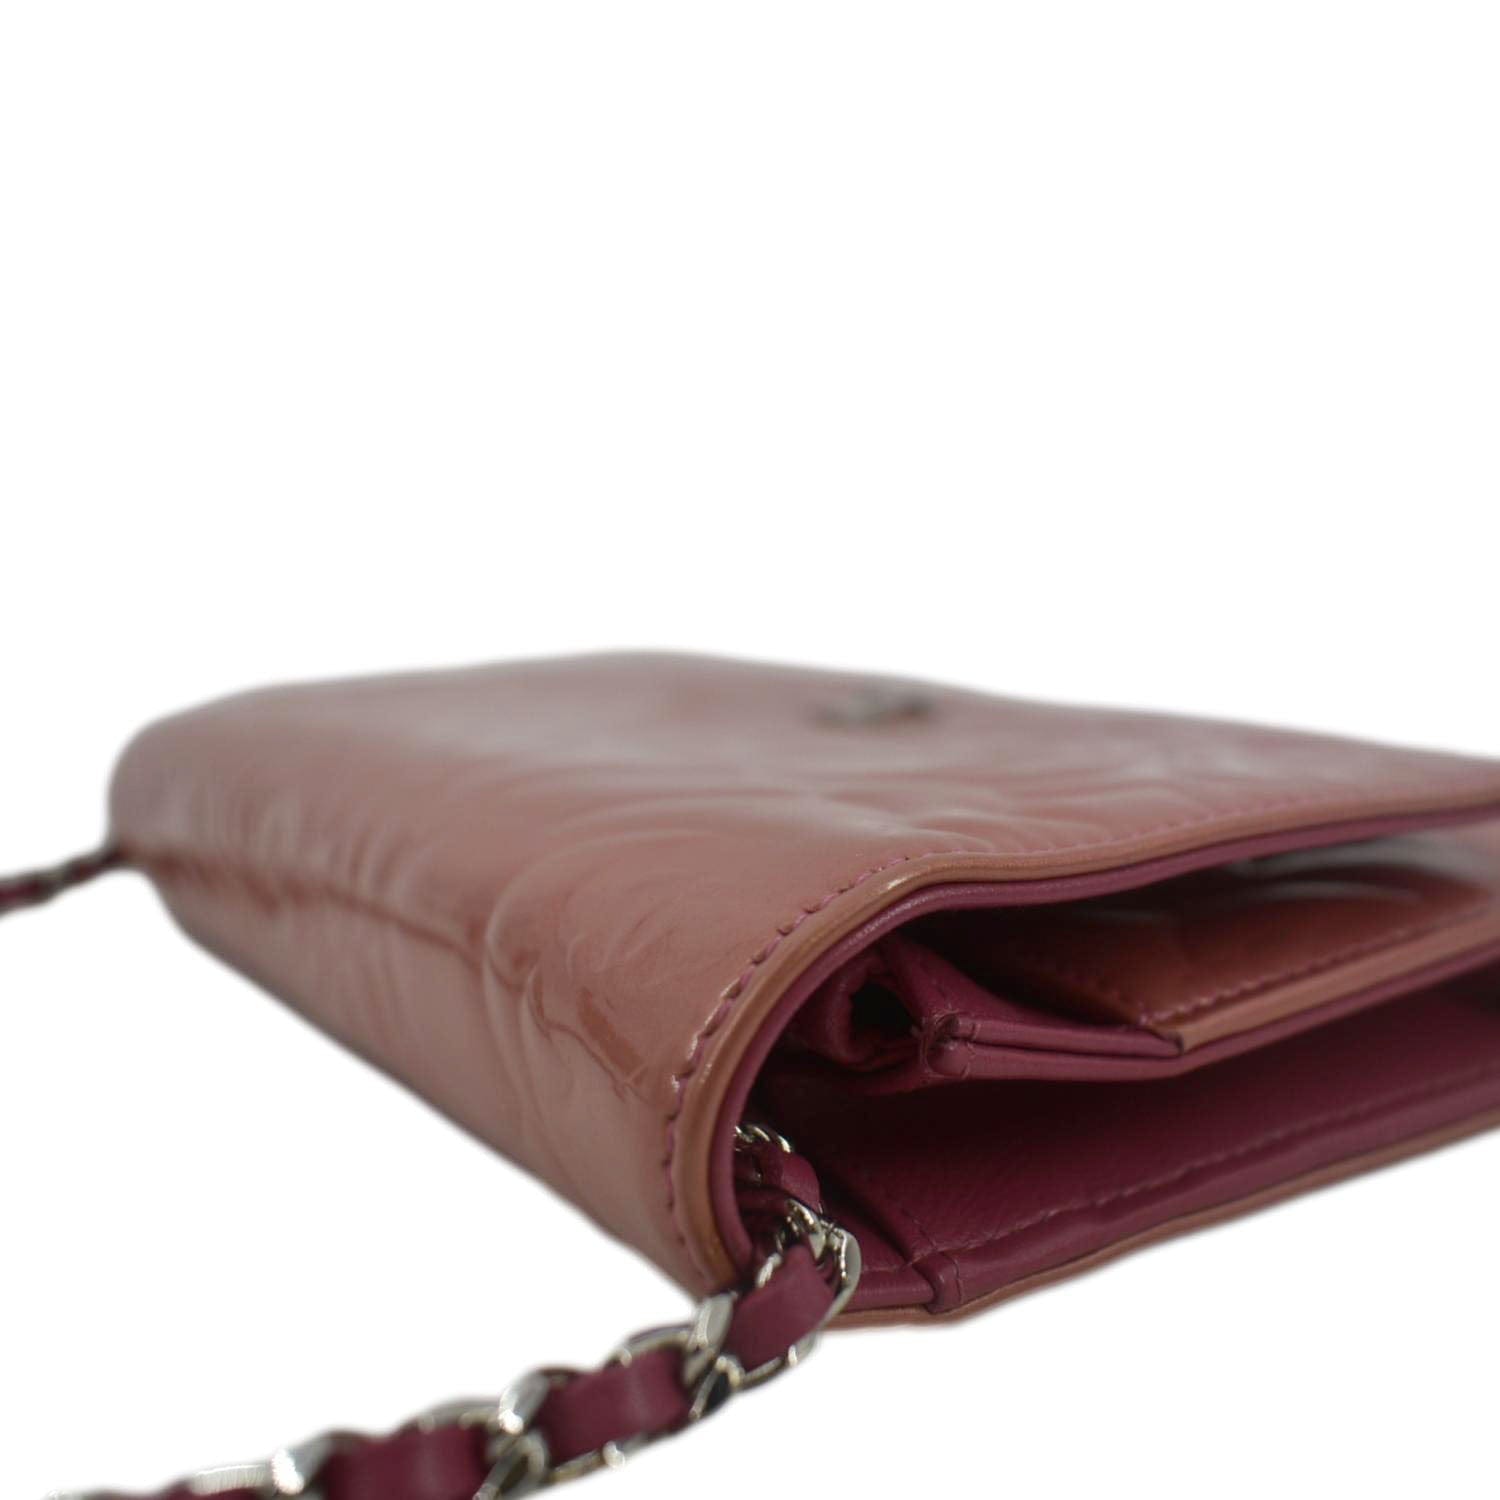 Chanel Camellia Raspberry Red Lambskin Chain Shoulder Bag